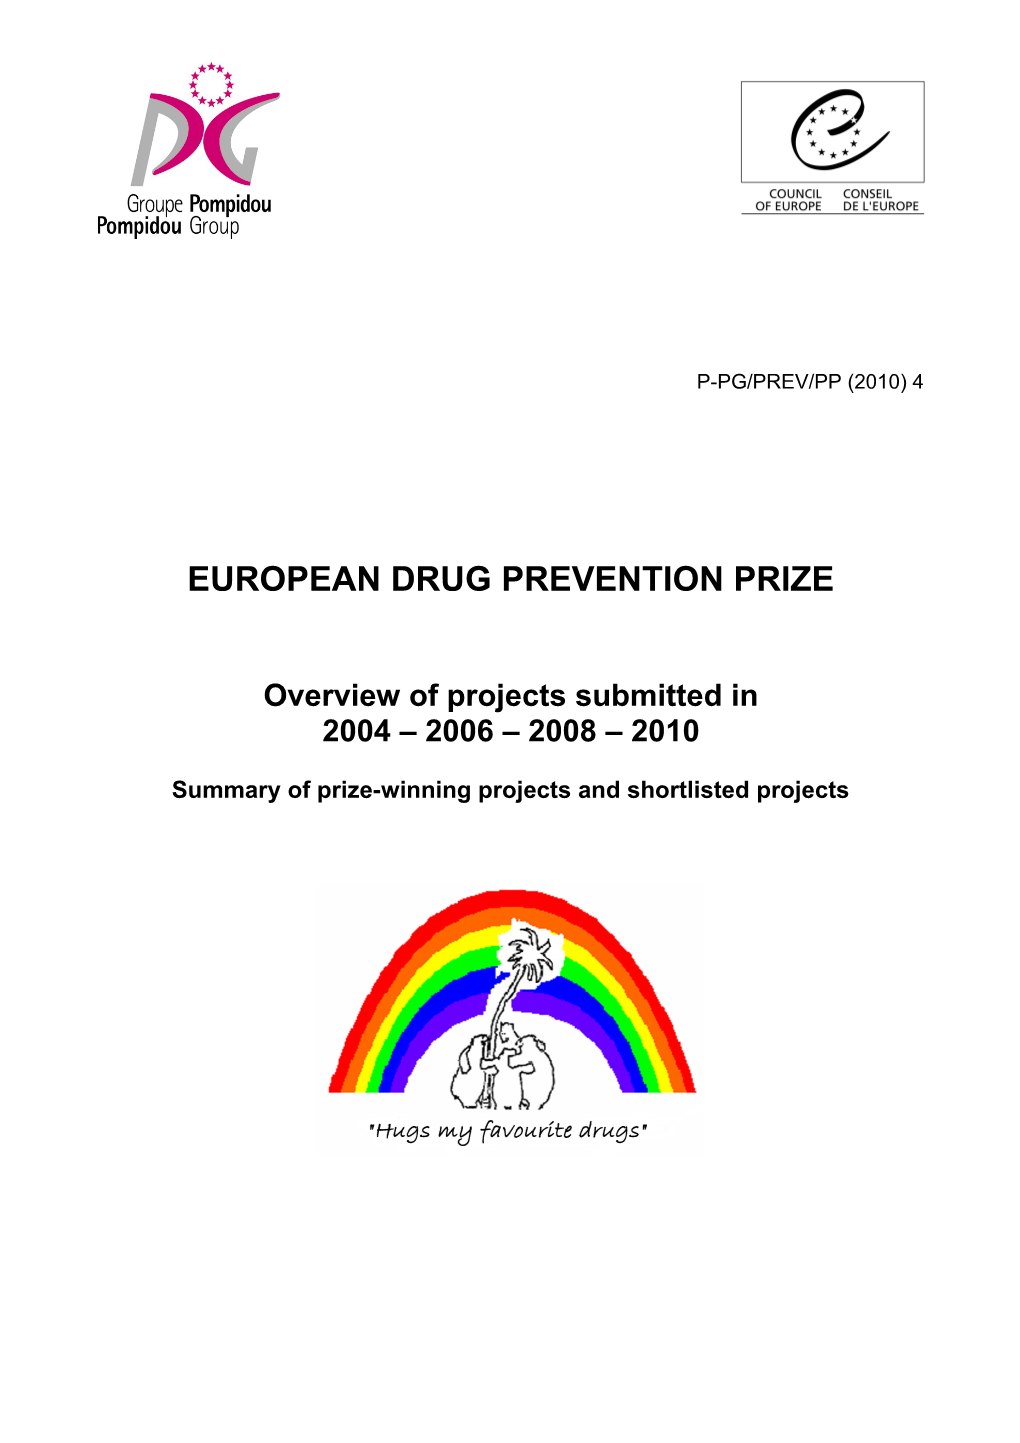 European Drug Prevention Prize